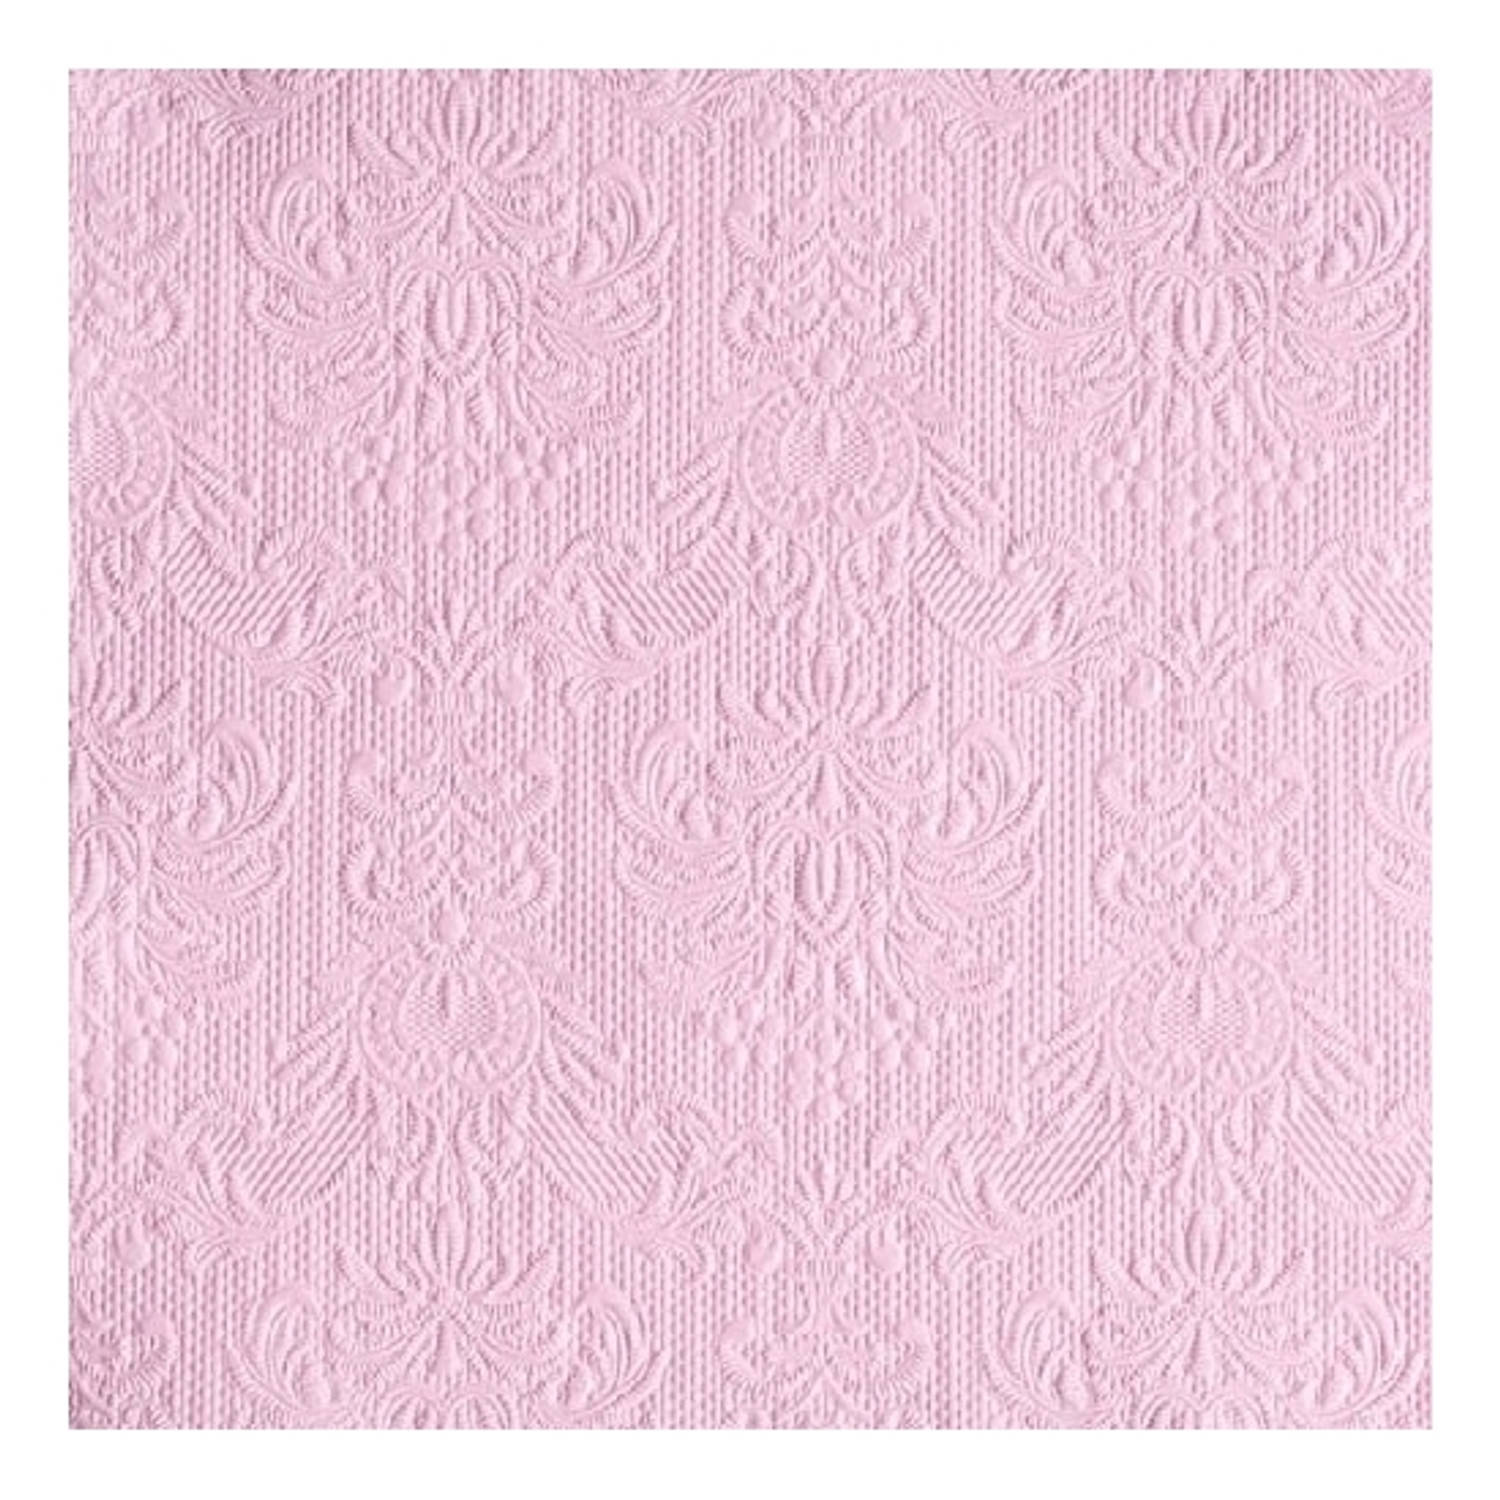 Luxe servetten barok patroon roze 3-laags 15 stuks